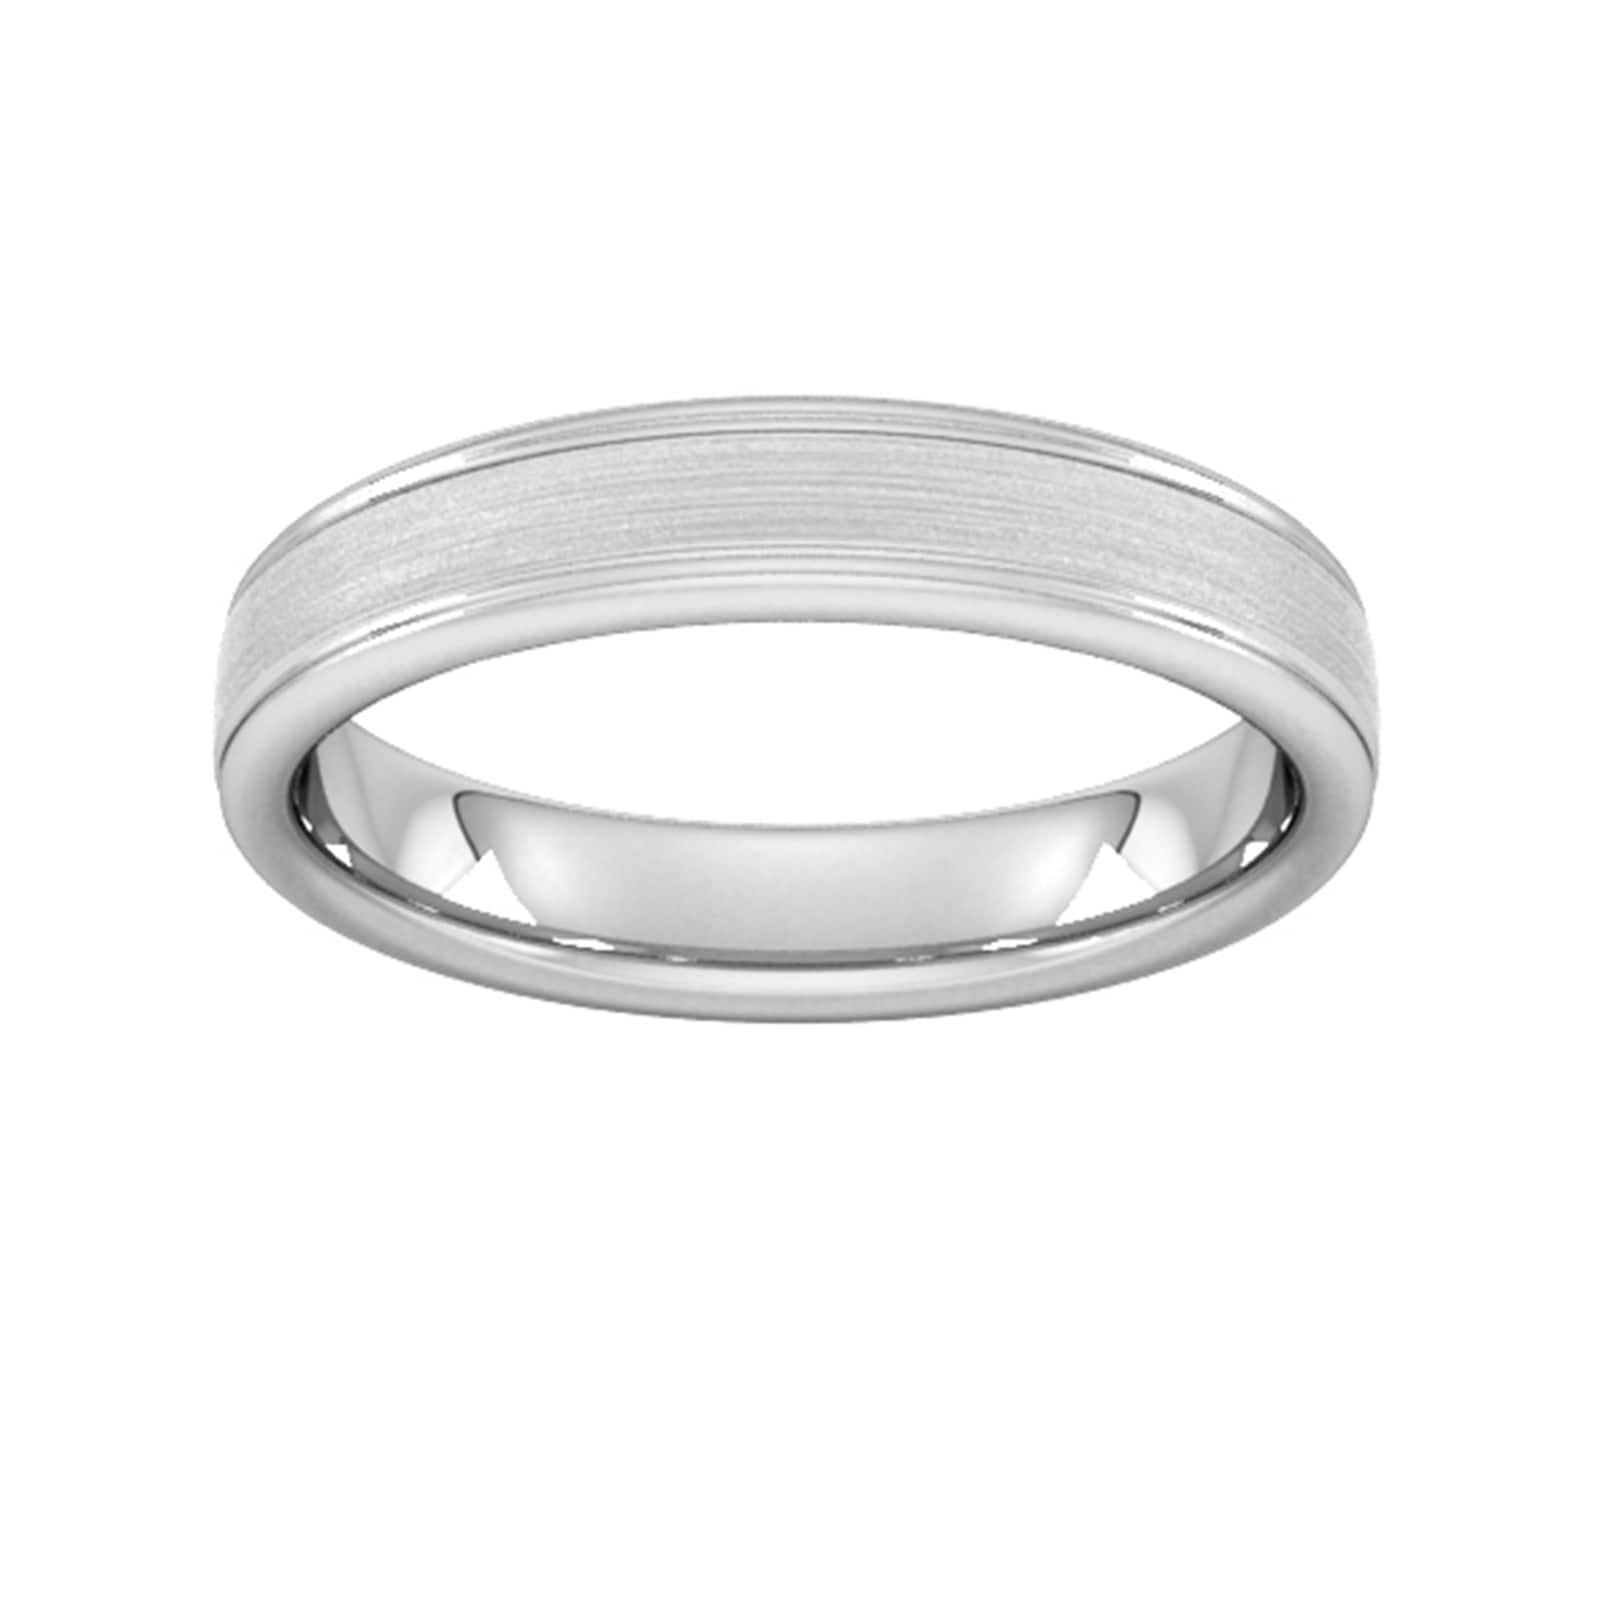 4mm Slight Court Standard Matt Centre With Grooves Wedding Ring In Platinum - Ring Size Q